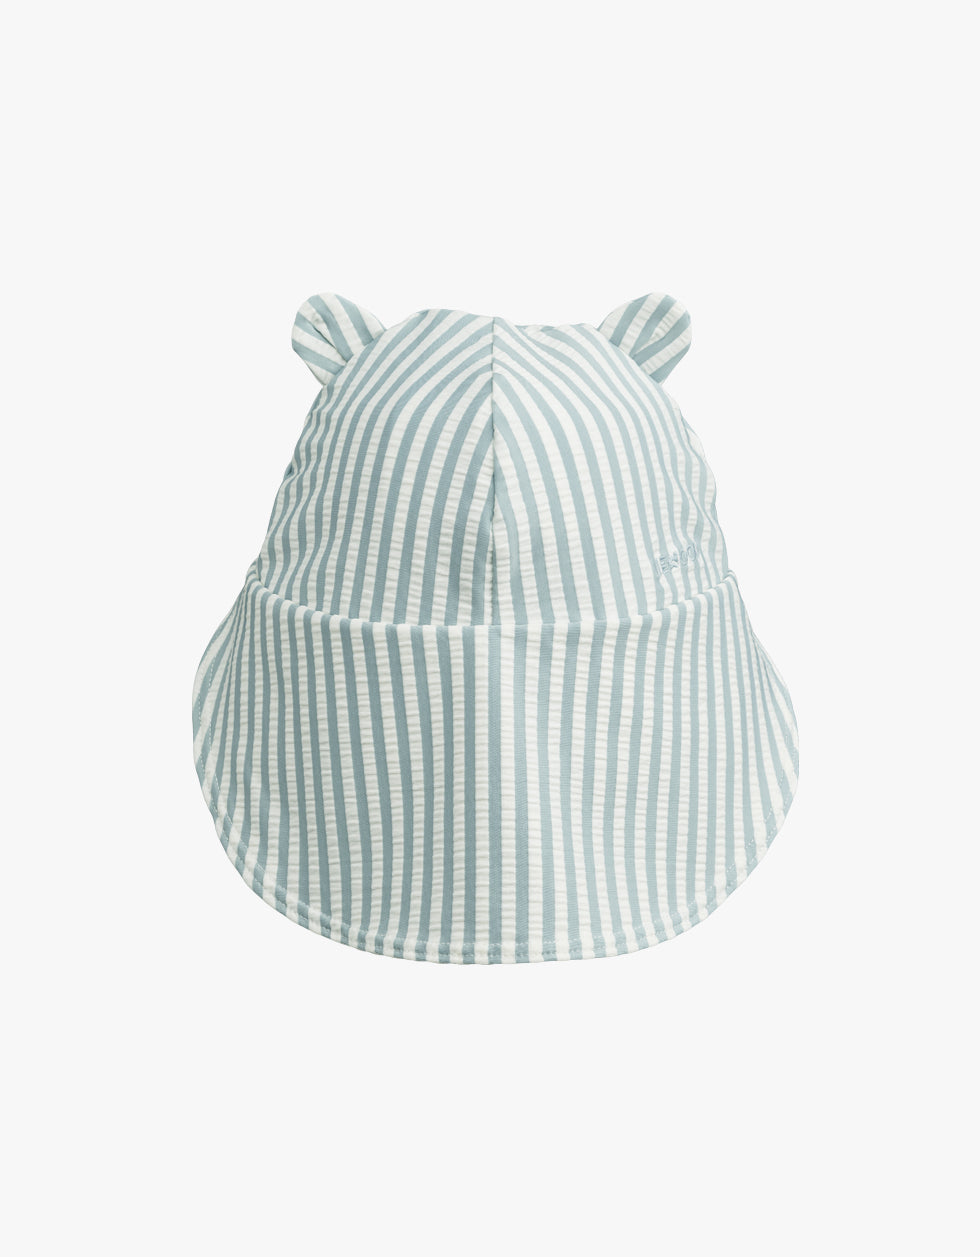 Senia Hat | Stripe Sea blue-white